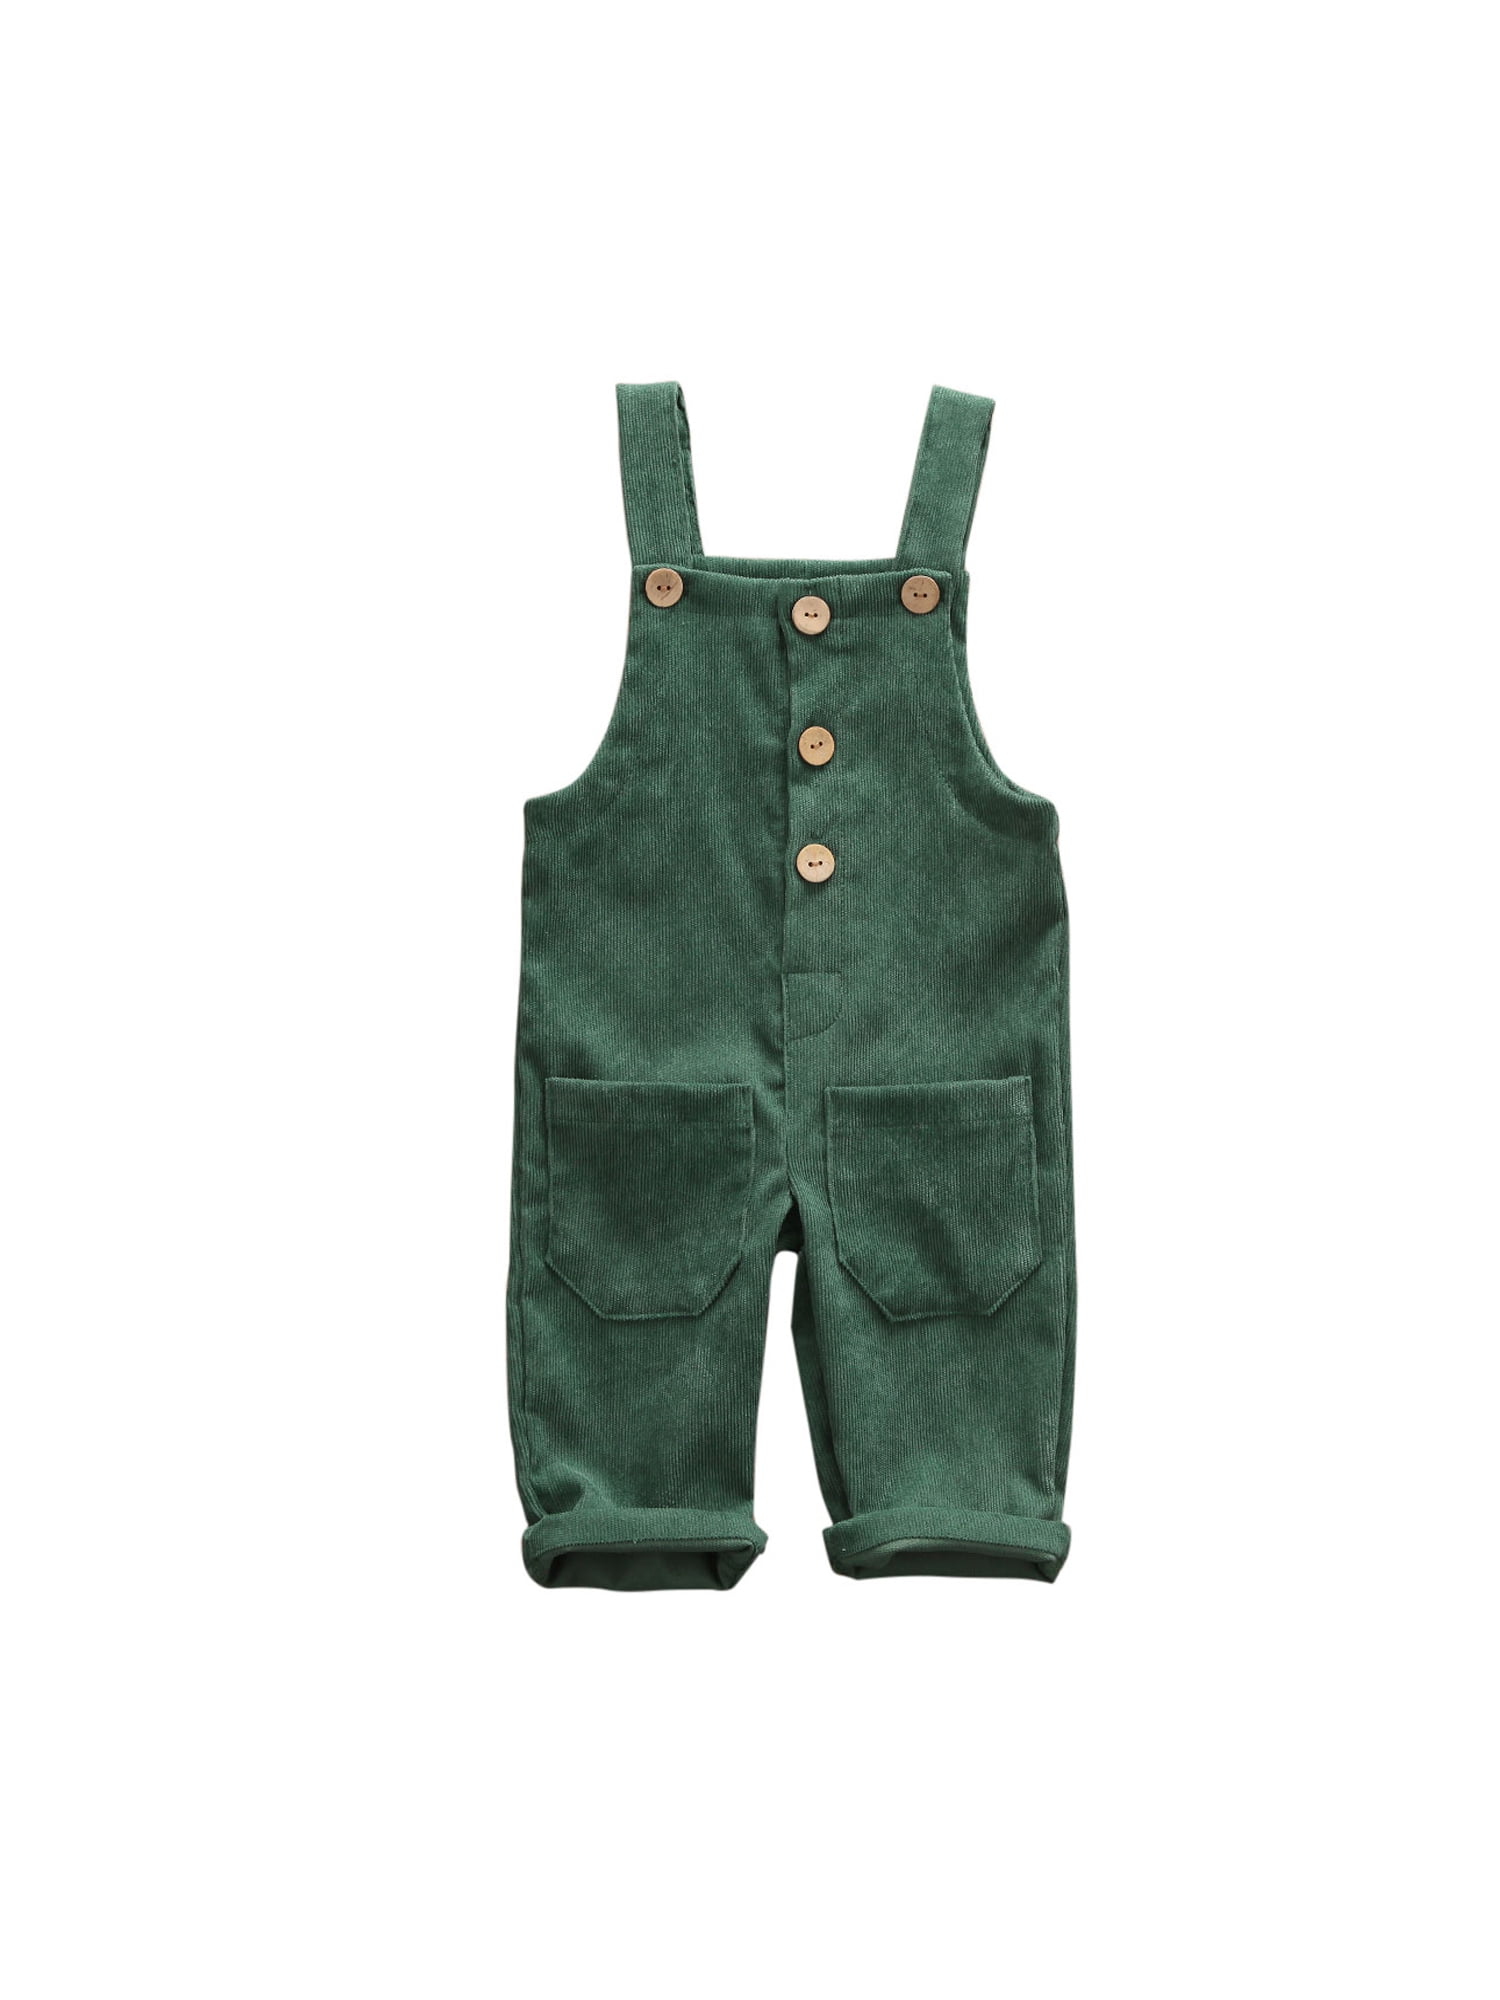 Yuemengxuan Newborn Infant Toddler Baby Boys Girls Bib Pants Adjustable Solid Color Jumpsuit Overalls Clothes 0-18 Months 